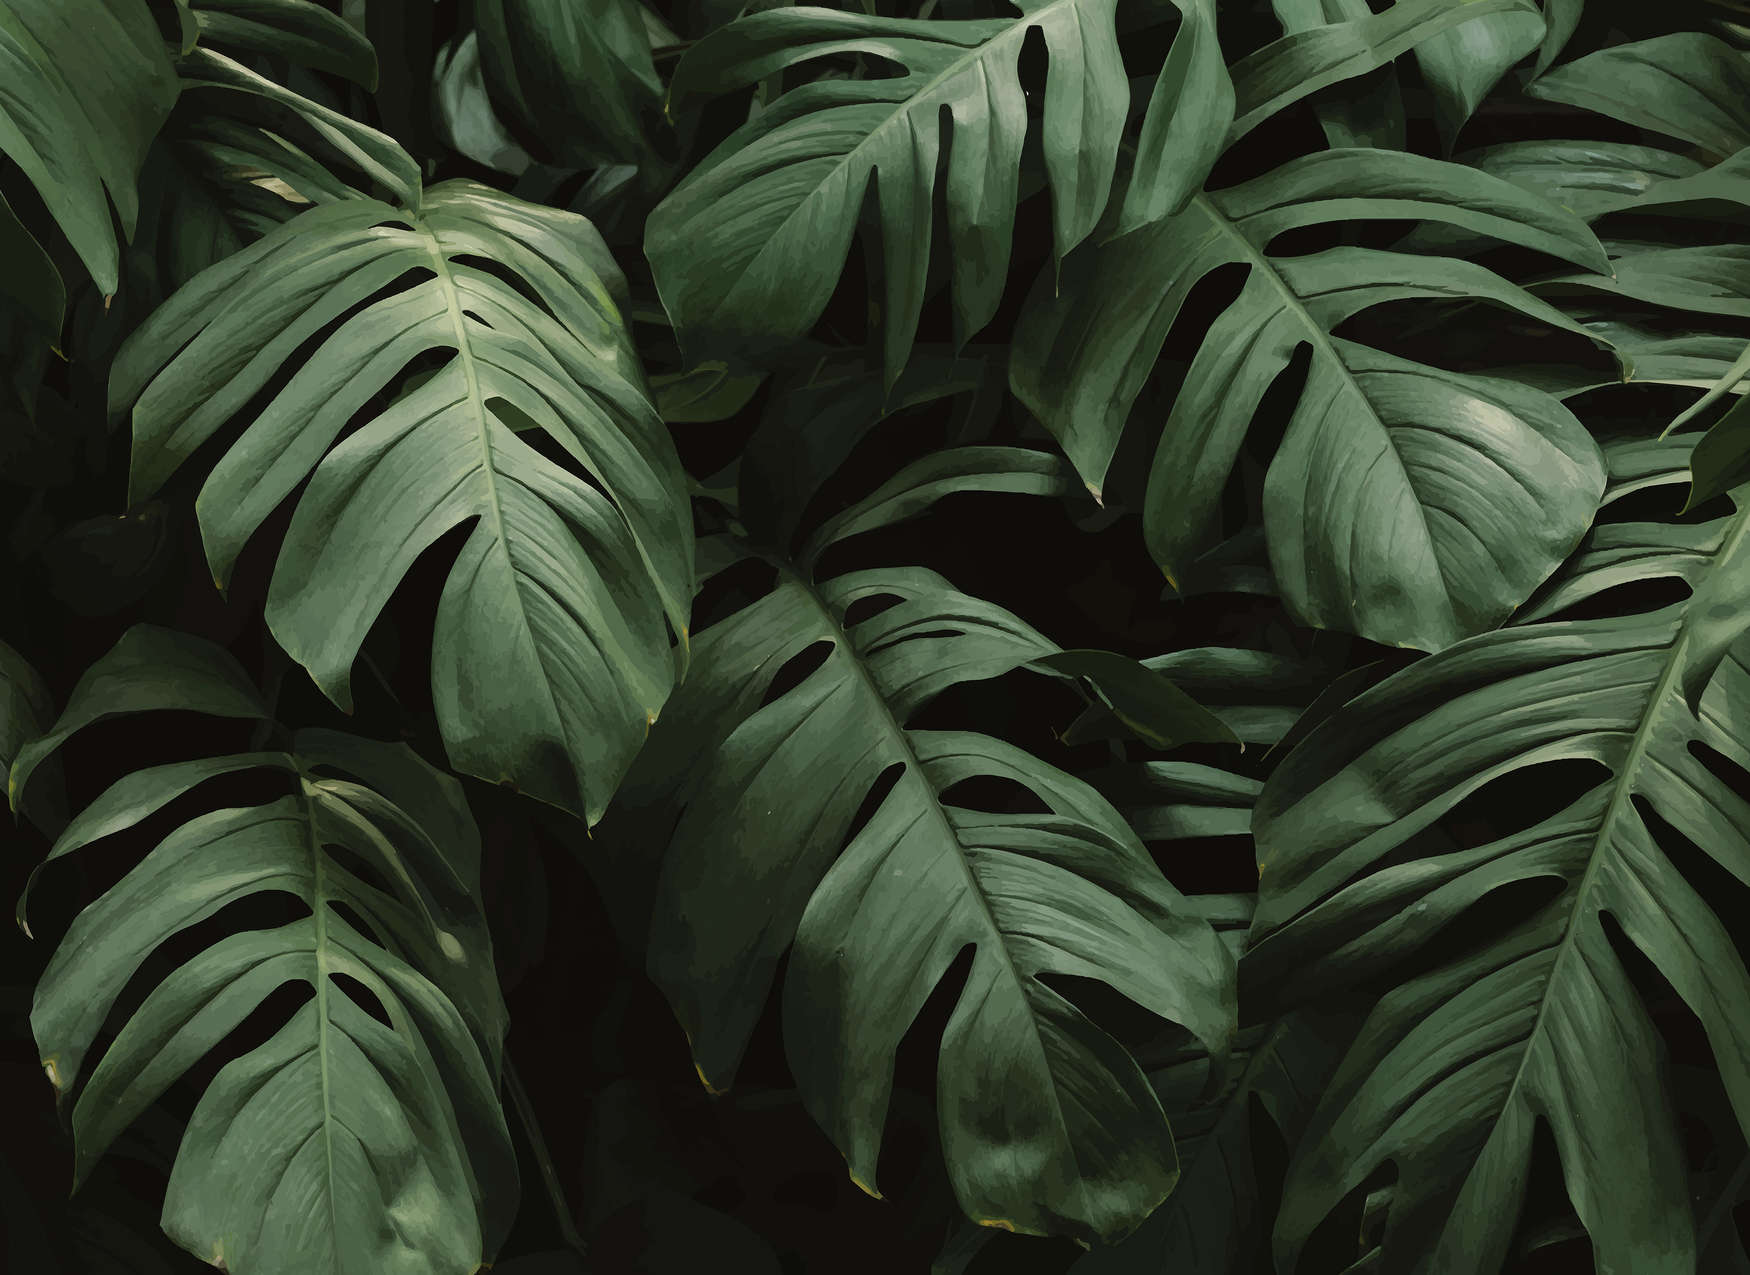             Fototapete tropische Dschungelblätter Close-Up – Grün
        